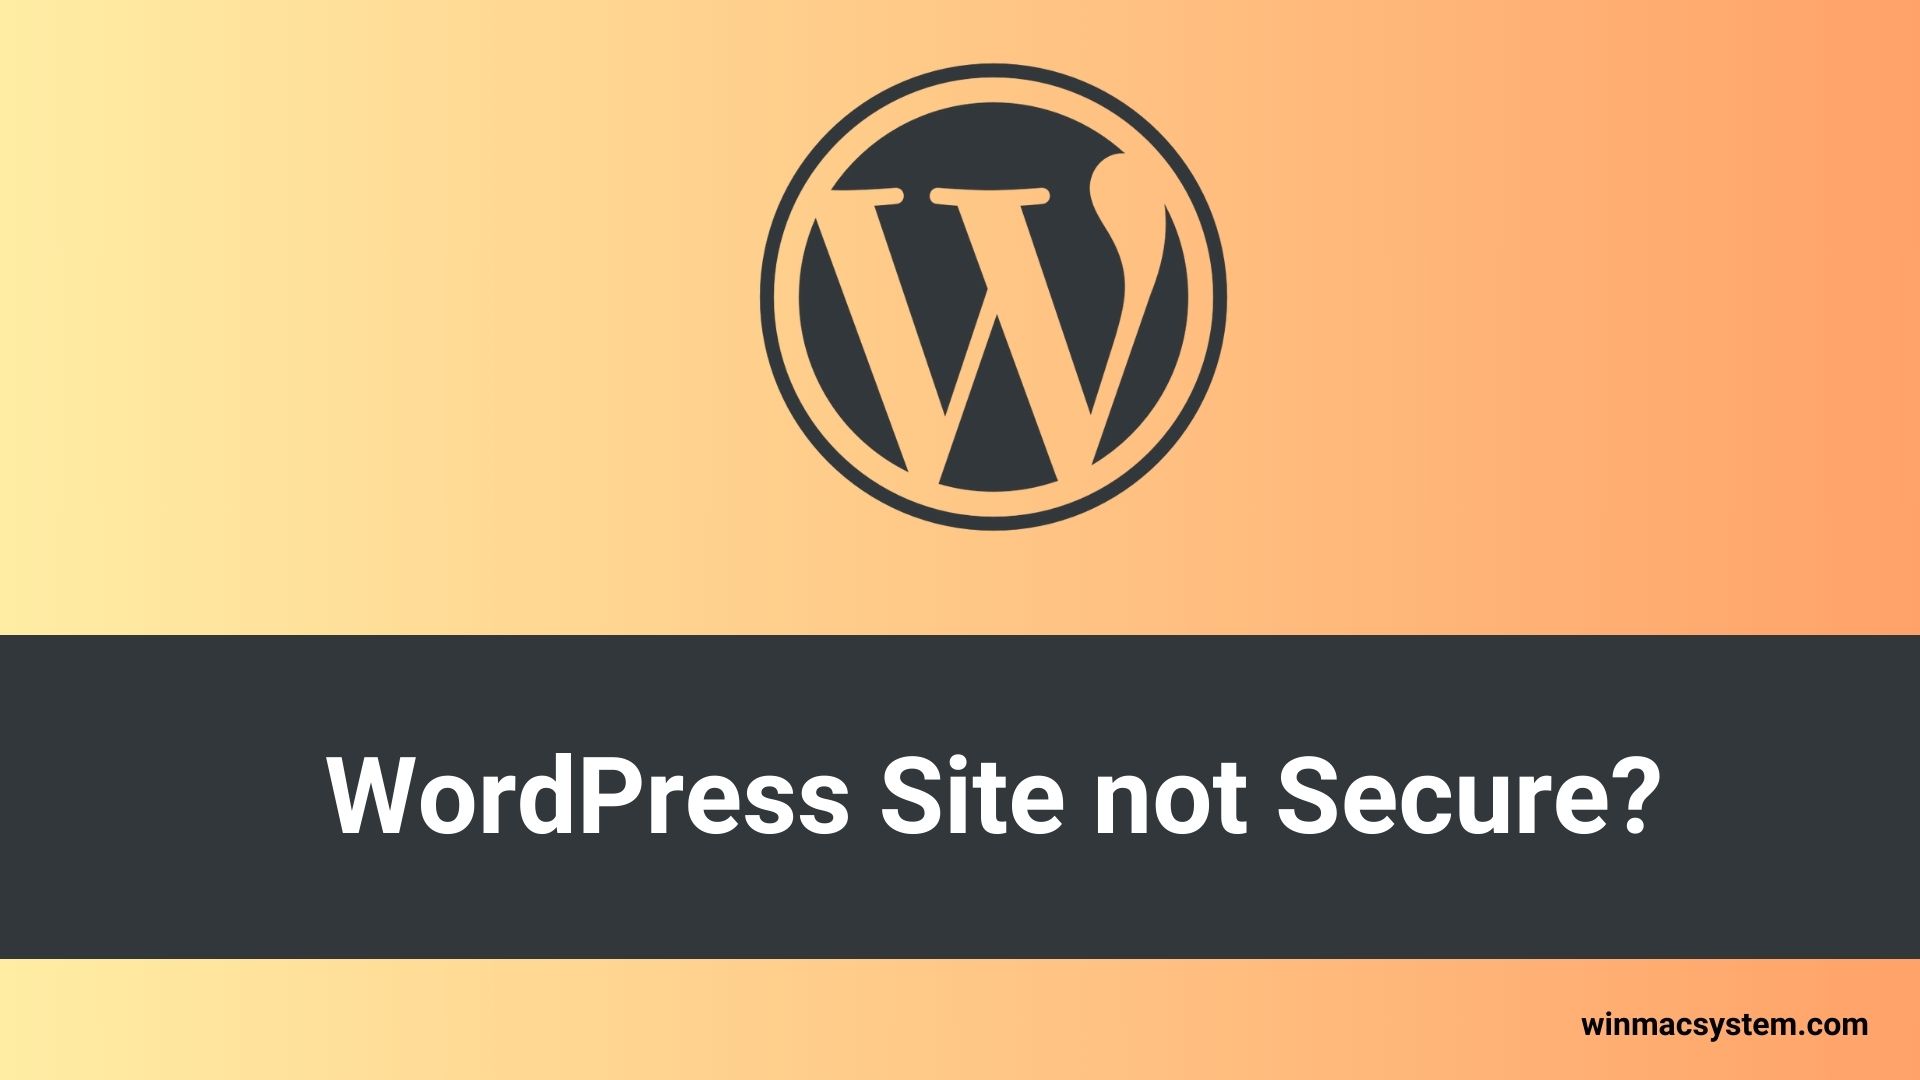 WordPress Site not Secure